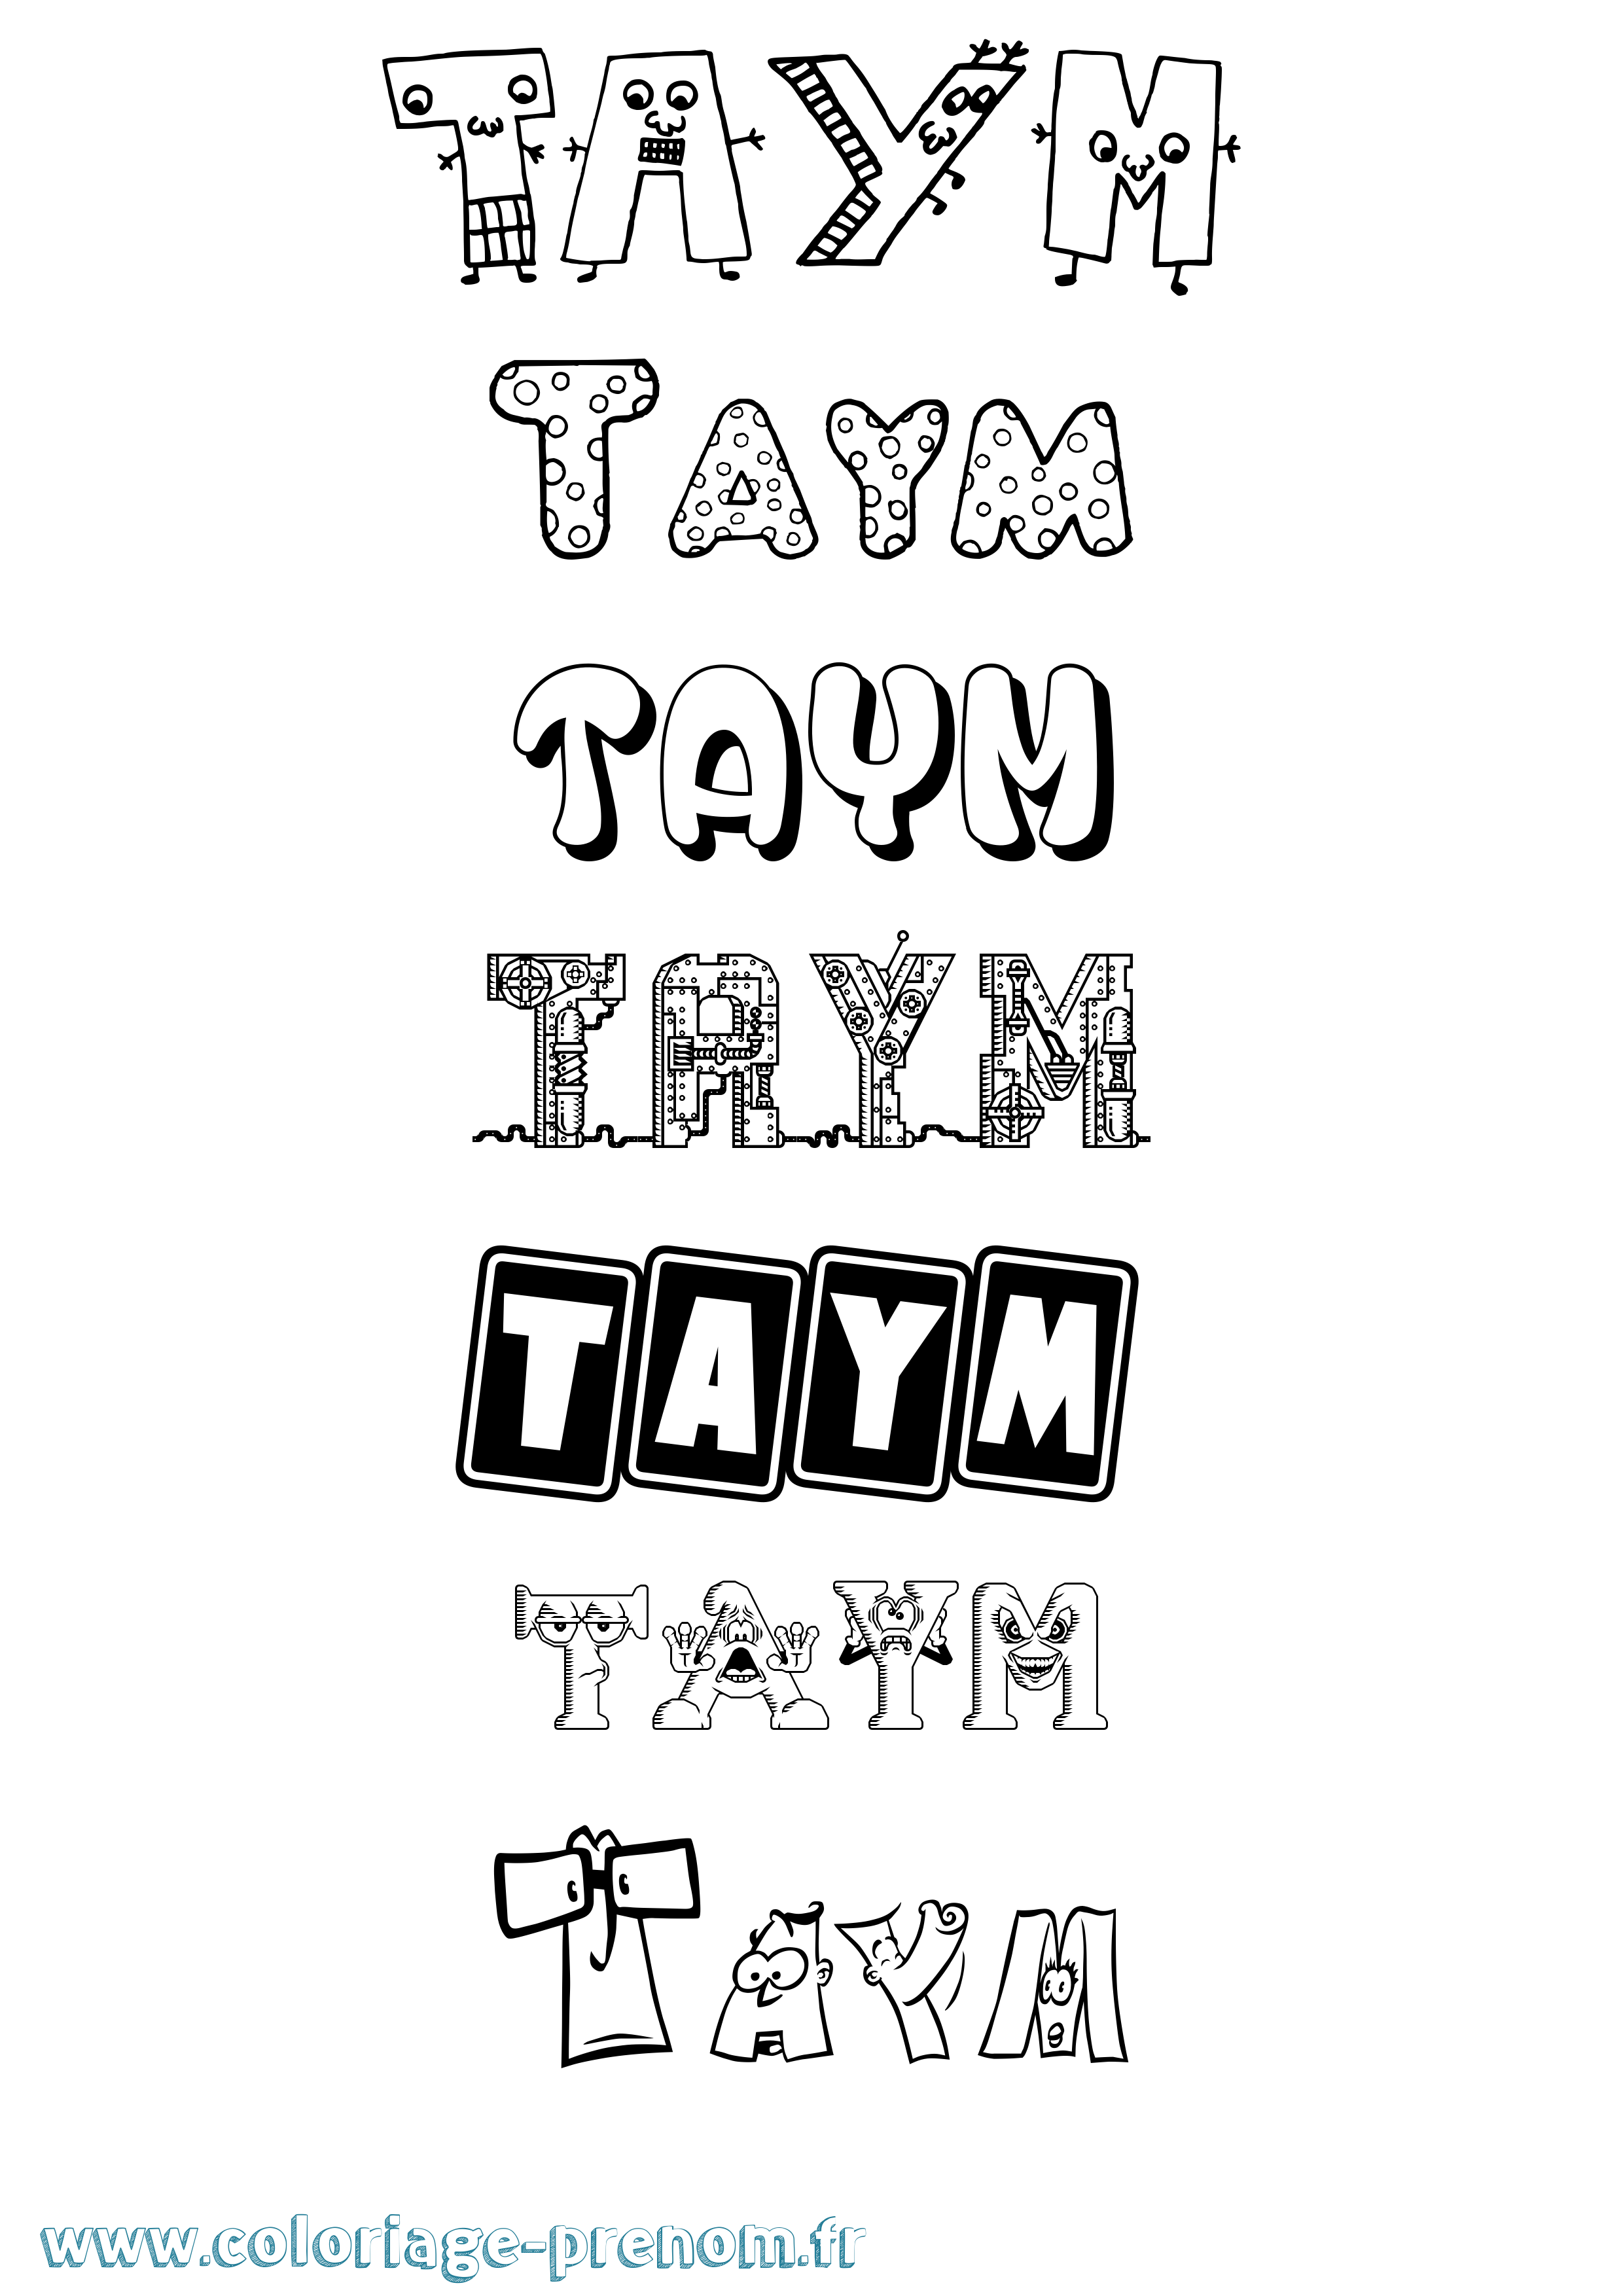 Coloriage prénom Taym Fun